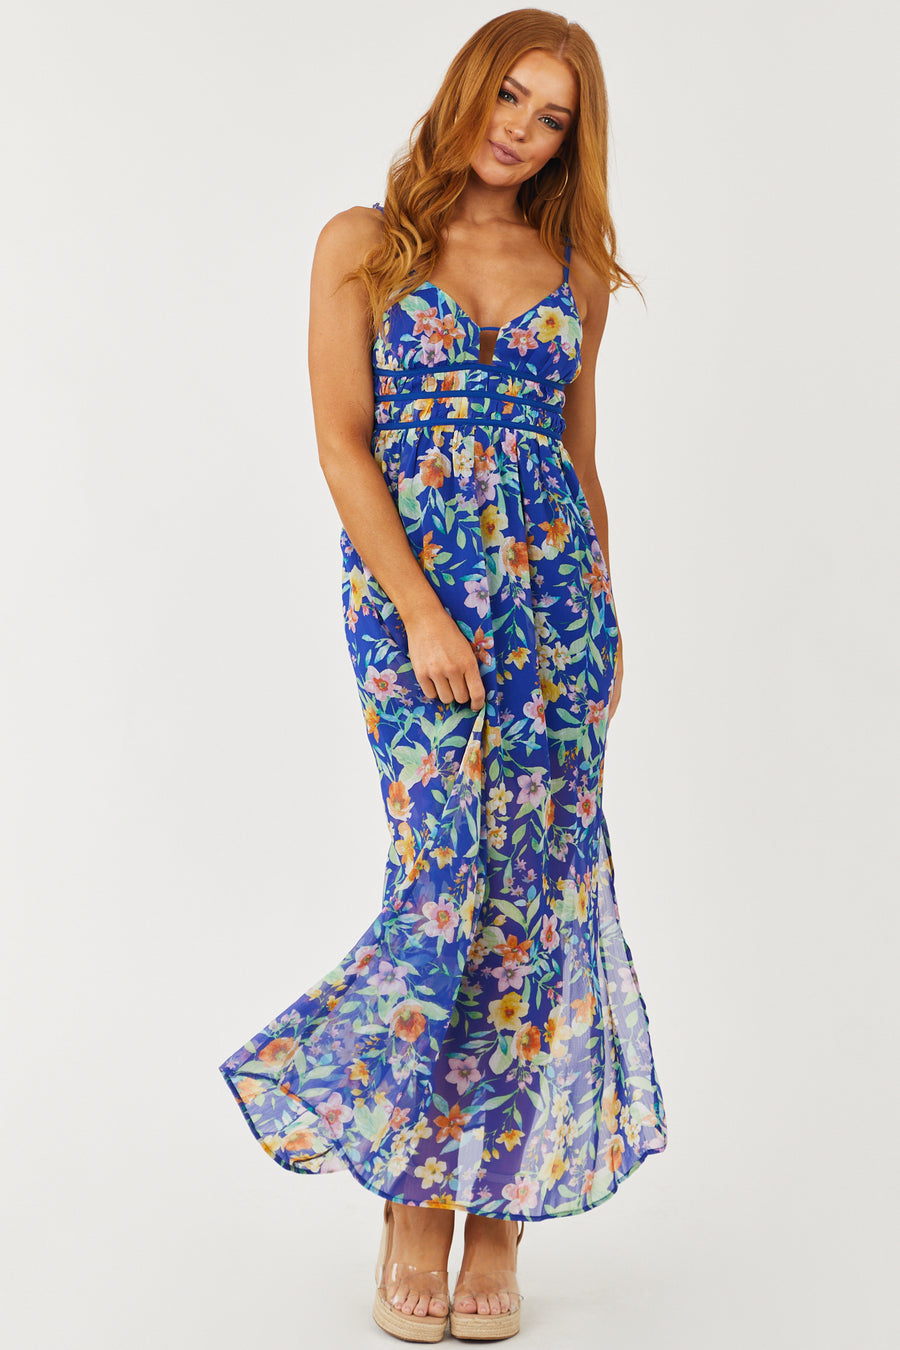 Cobalt Floral Print Sleeveless Maxi Dress